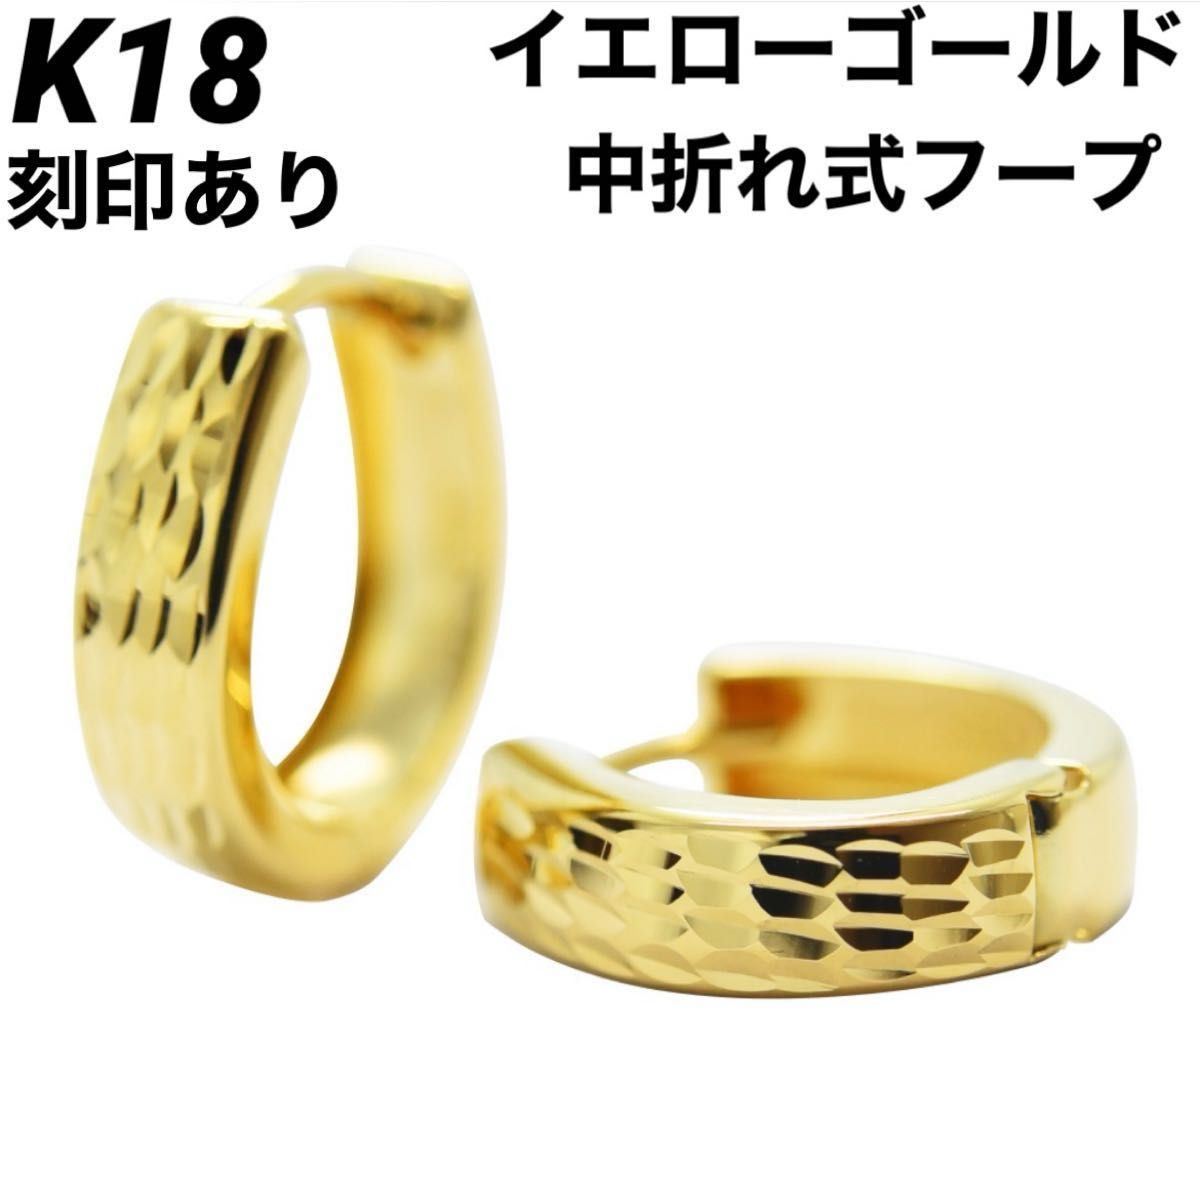 K18 18金 18k ピアス ゴールド 中折れ式 フープ  18金ピアス 刻印あり 上質 日本製 ペア